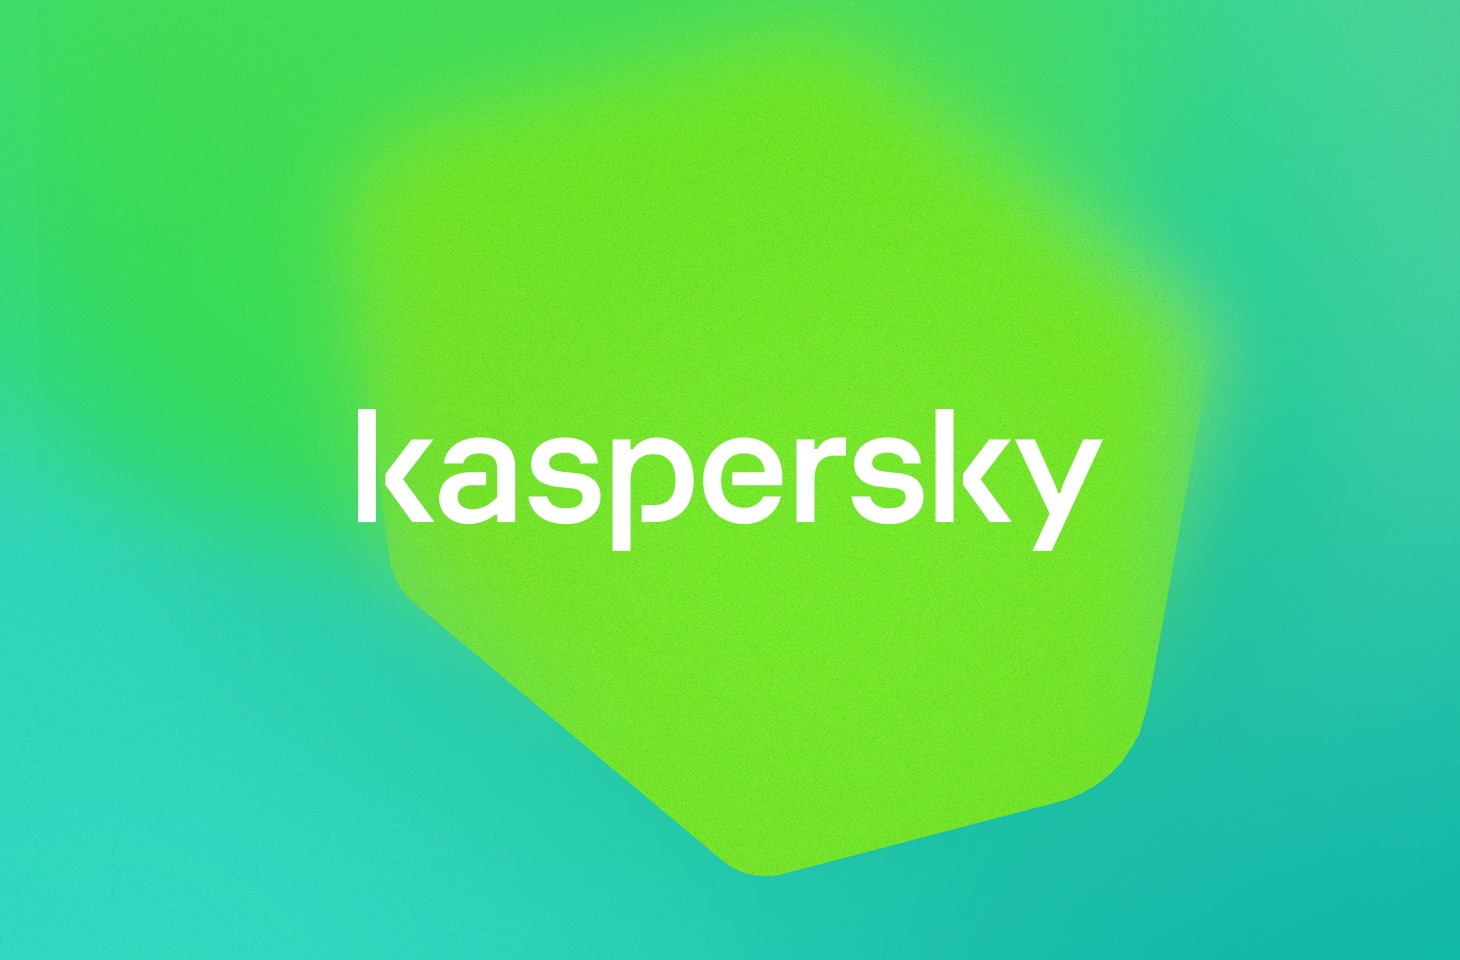 kaspersky google play